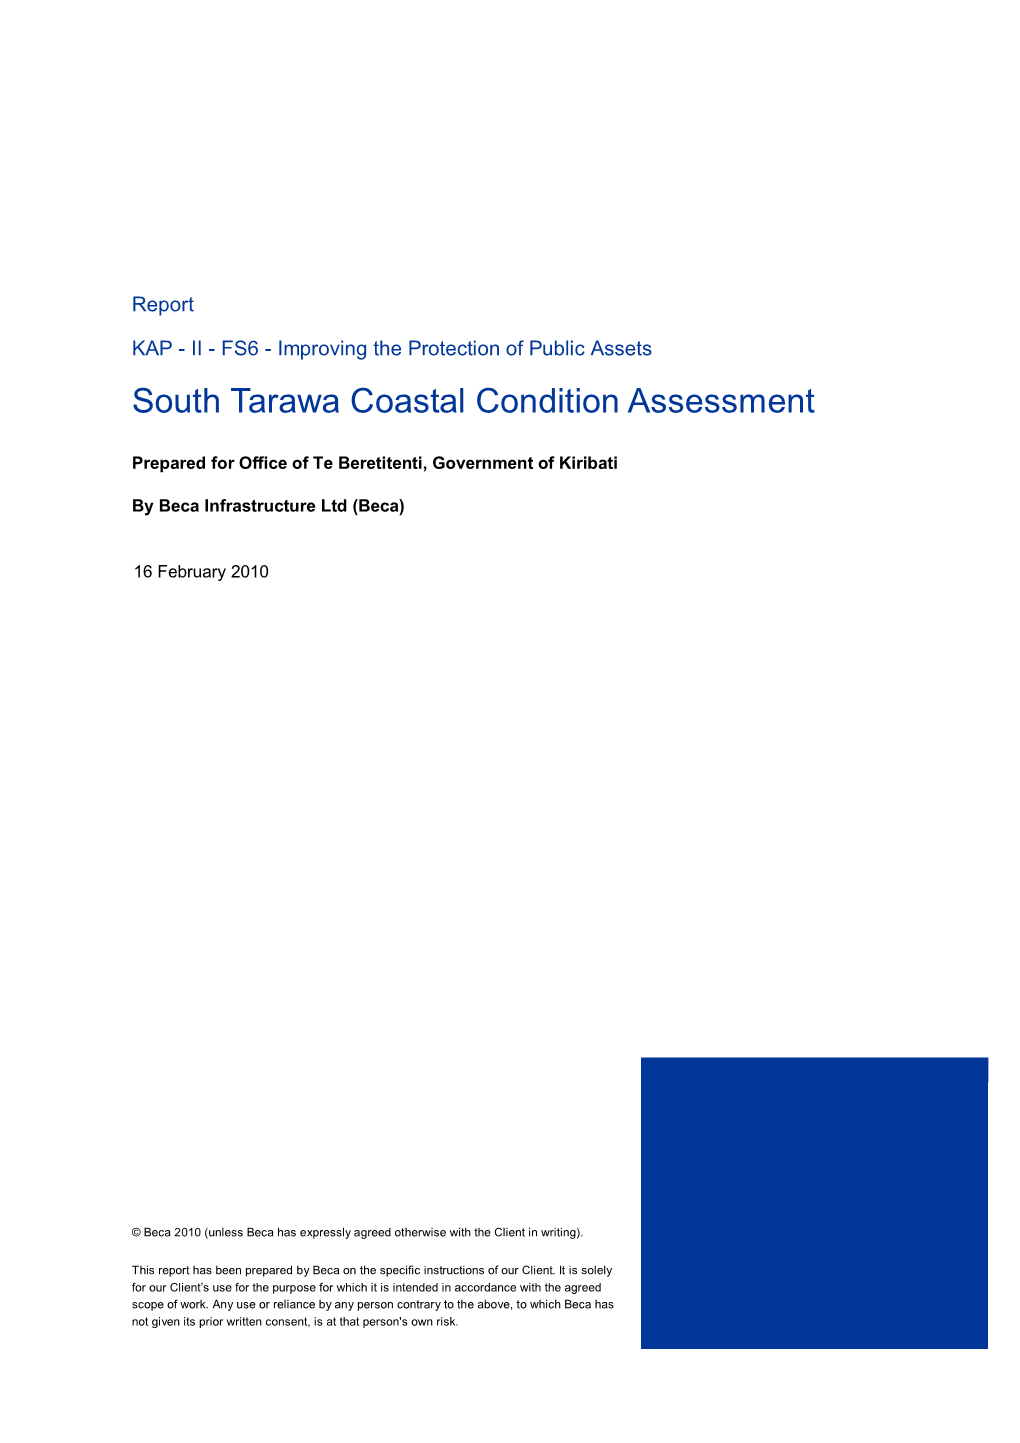 South Tarawa Coastal Condition Assessment